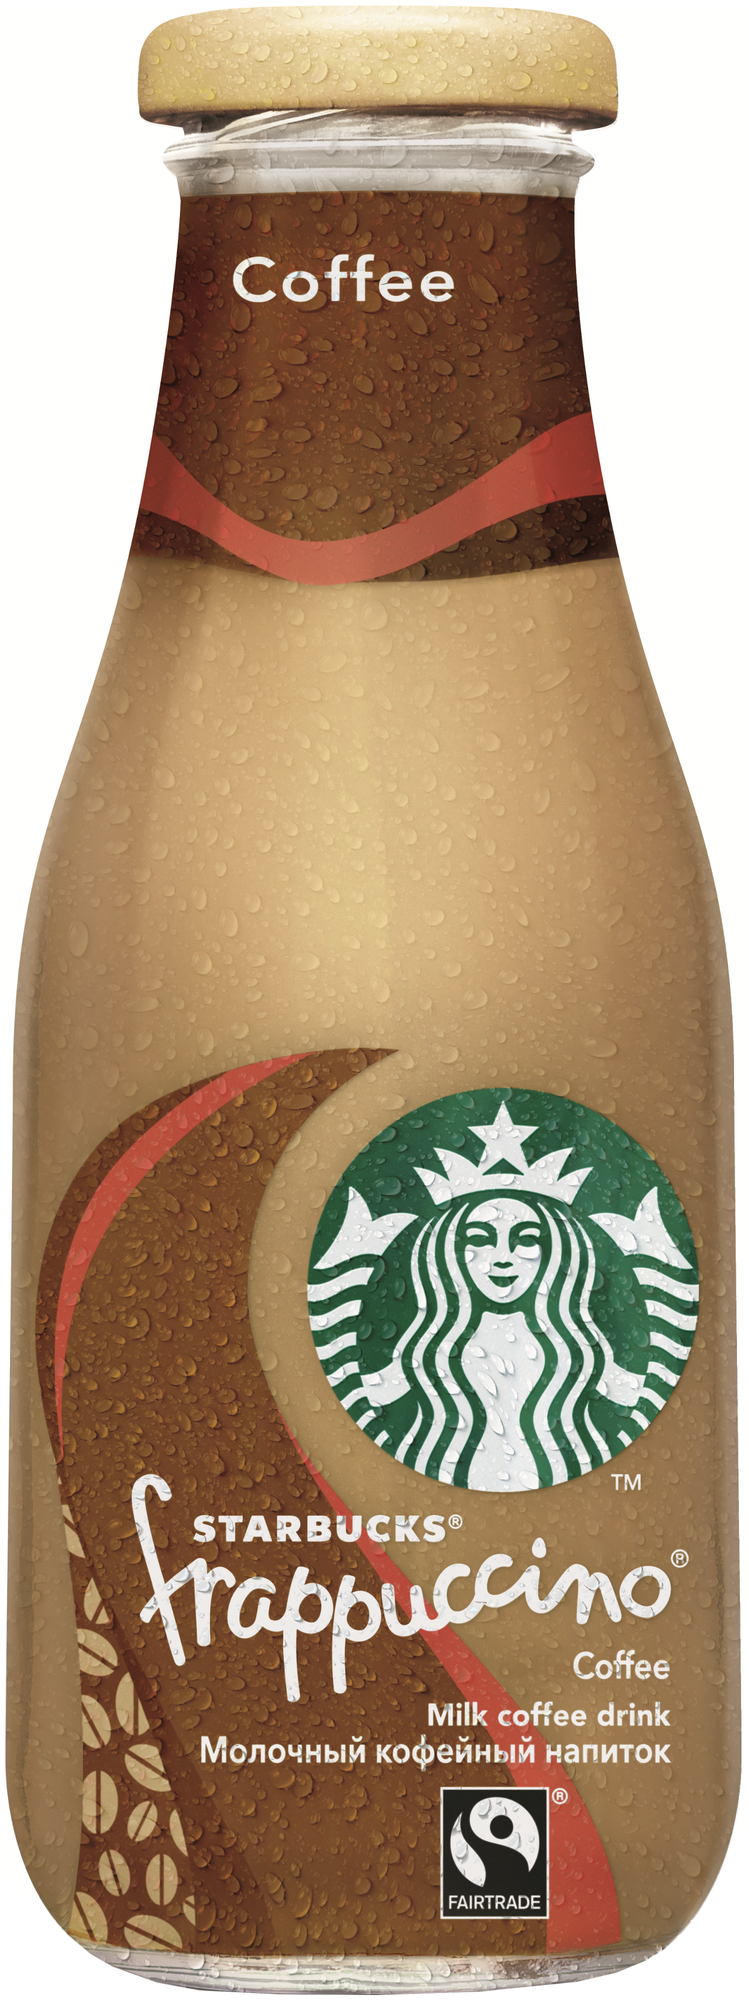 Молочный кофейный напиток Starbucks Frappuccino Coffee, 0.25 л